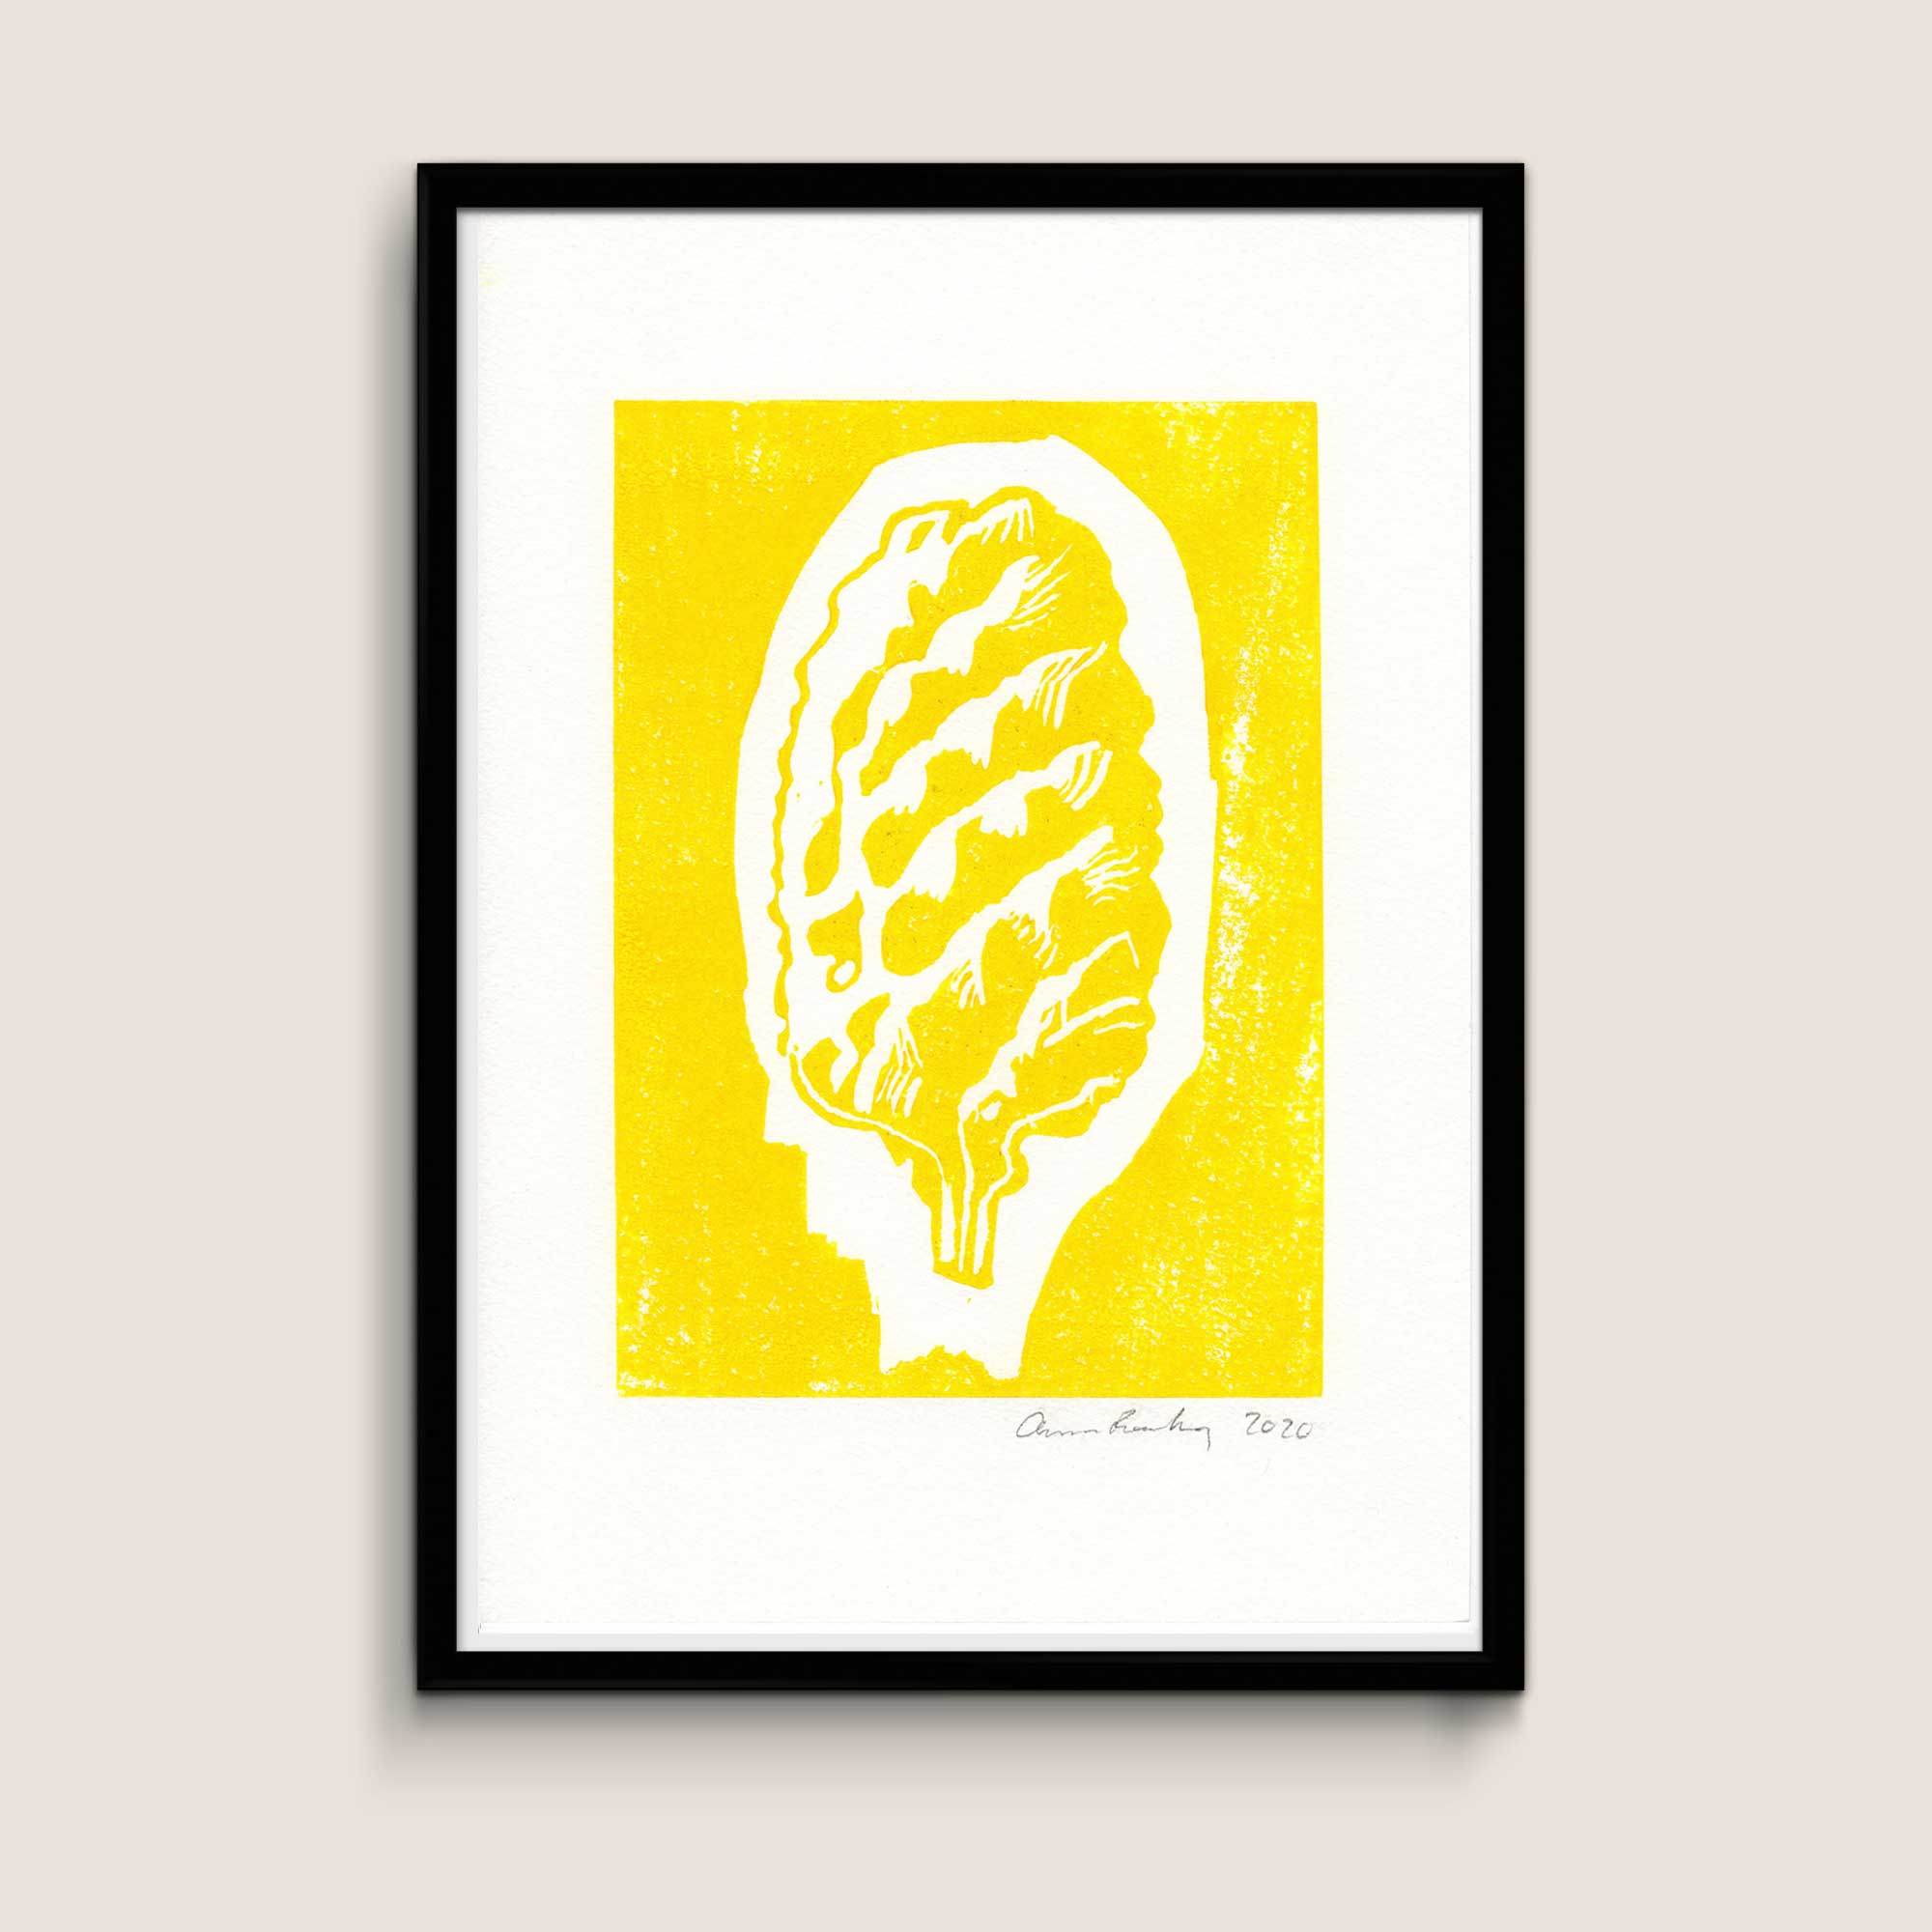 Cone, yellow, A4 size linocut by Anne Rosenberg, RosenbergCph